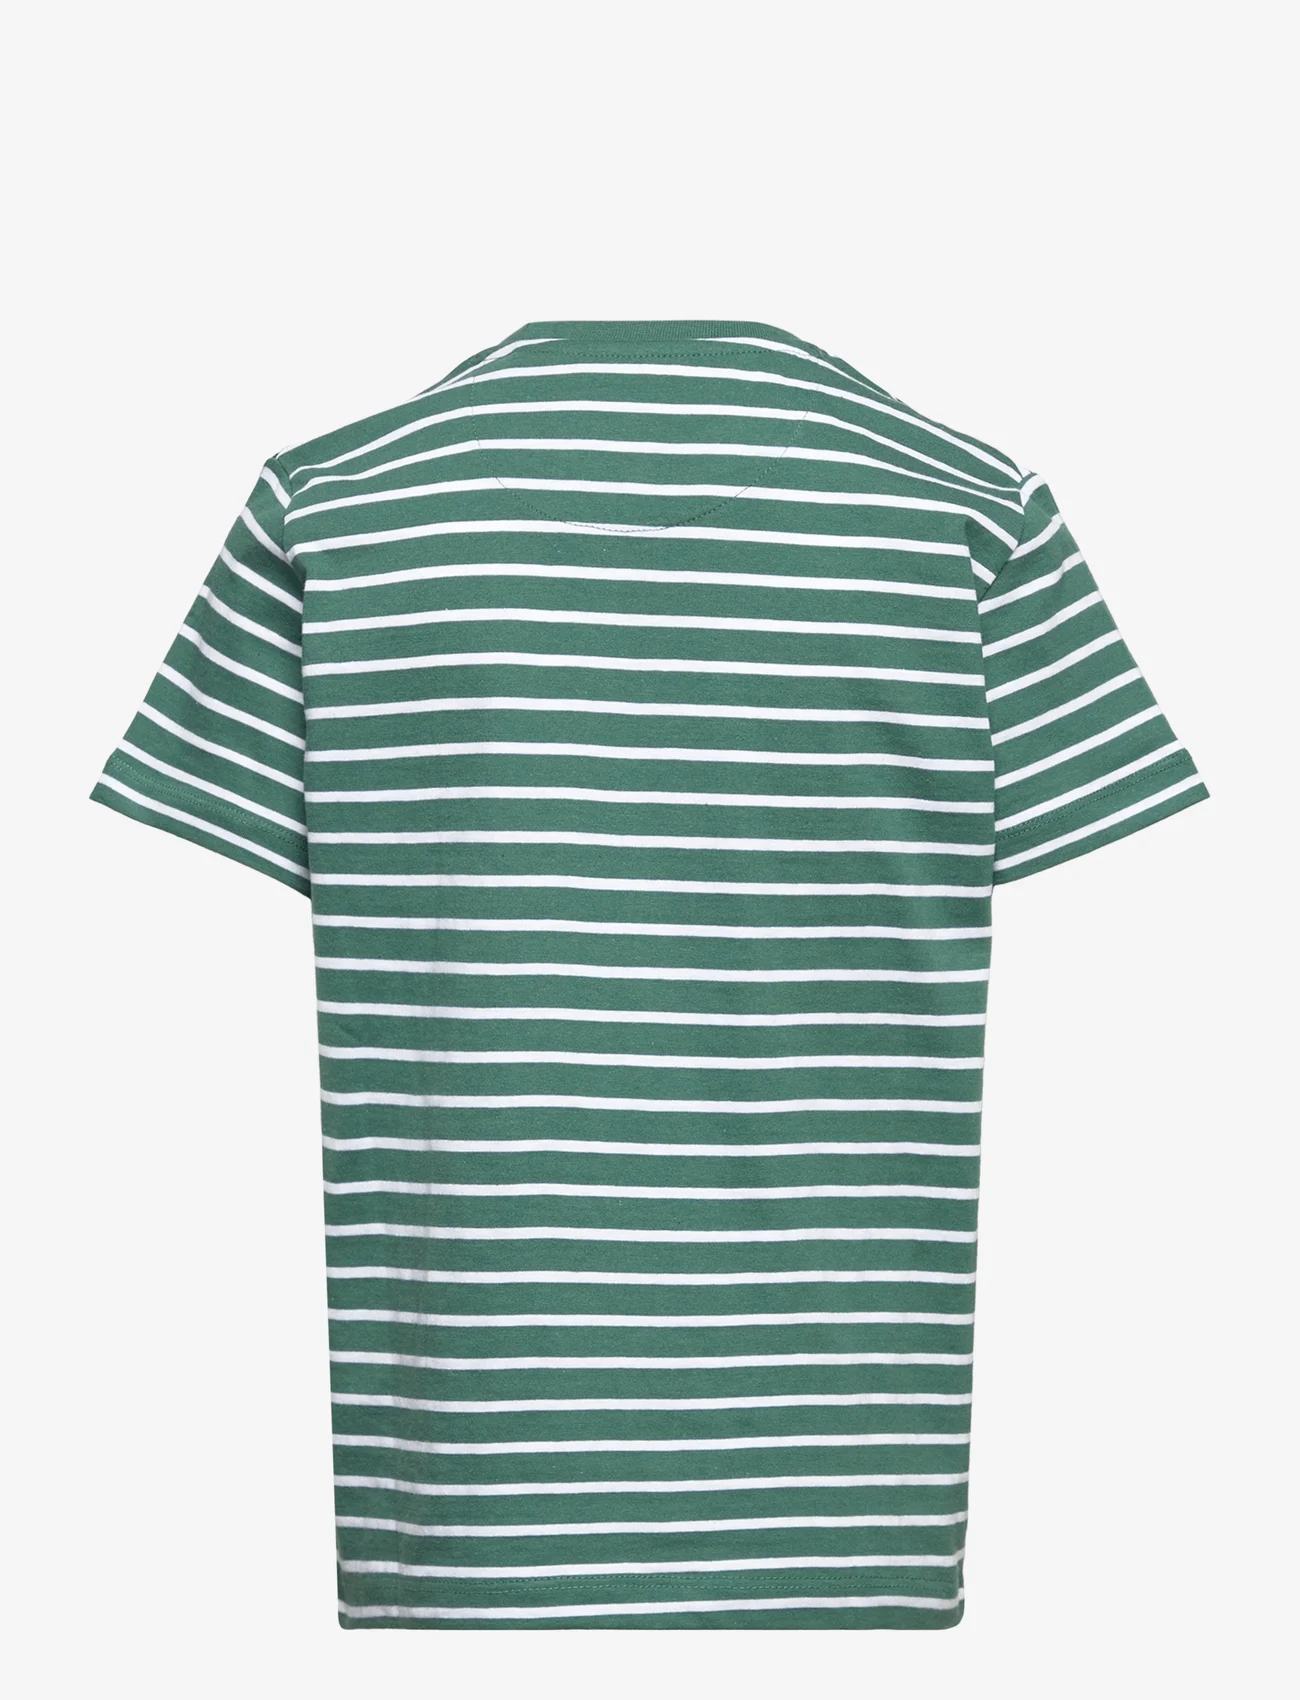 Kronstadt - Timmi Kids Organic/Recycled striped t-shirt - short-sleeved - mallard green/white - 1